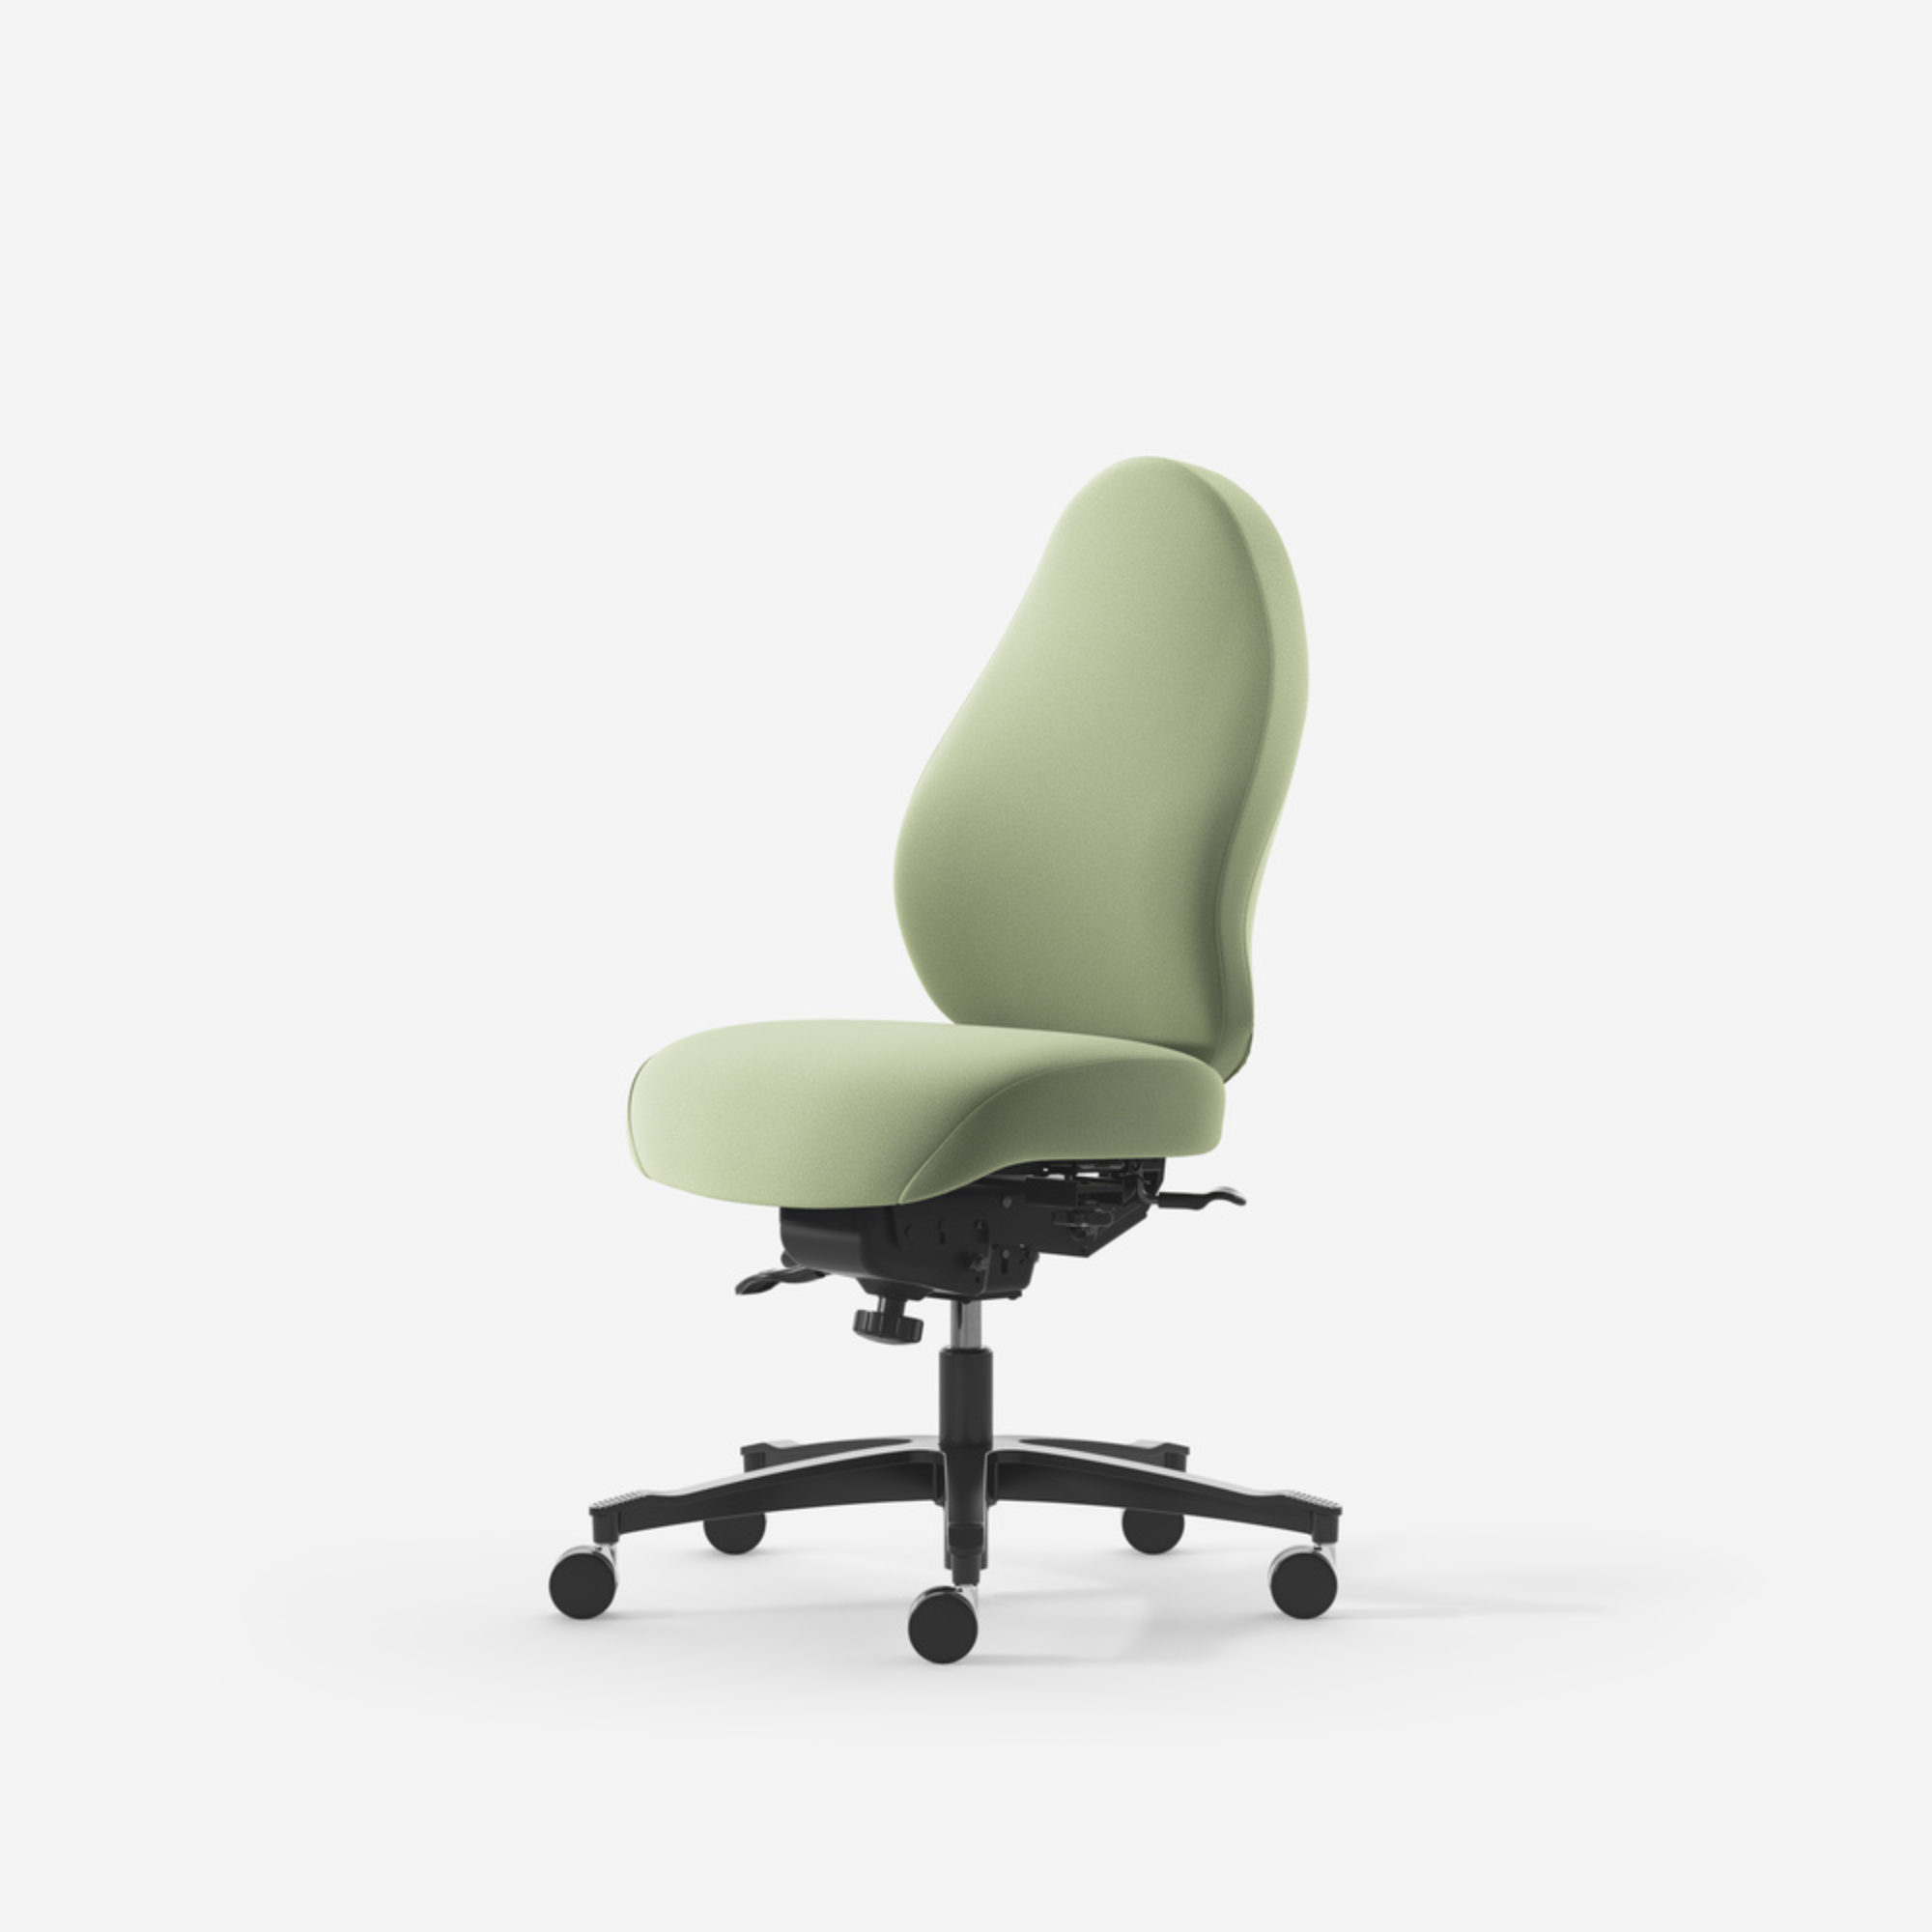 Malmstolen R4 kontorsstol ergonomisk stol